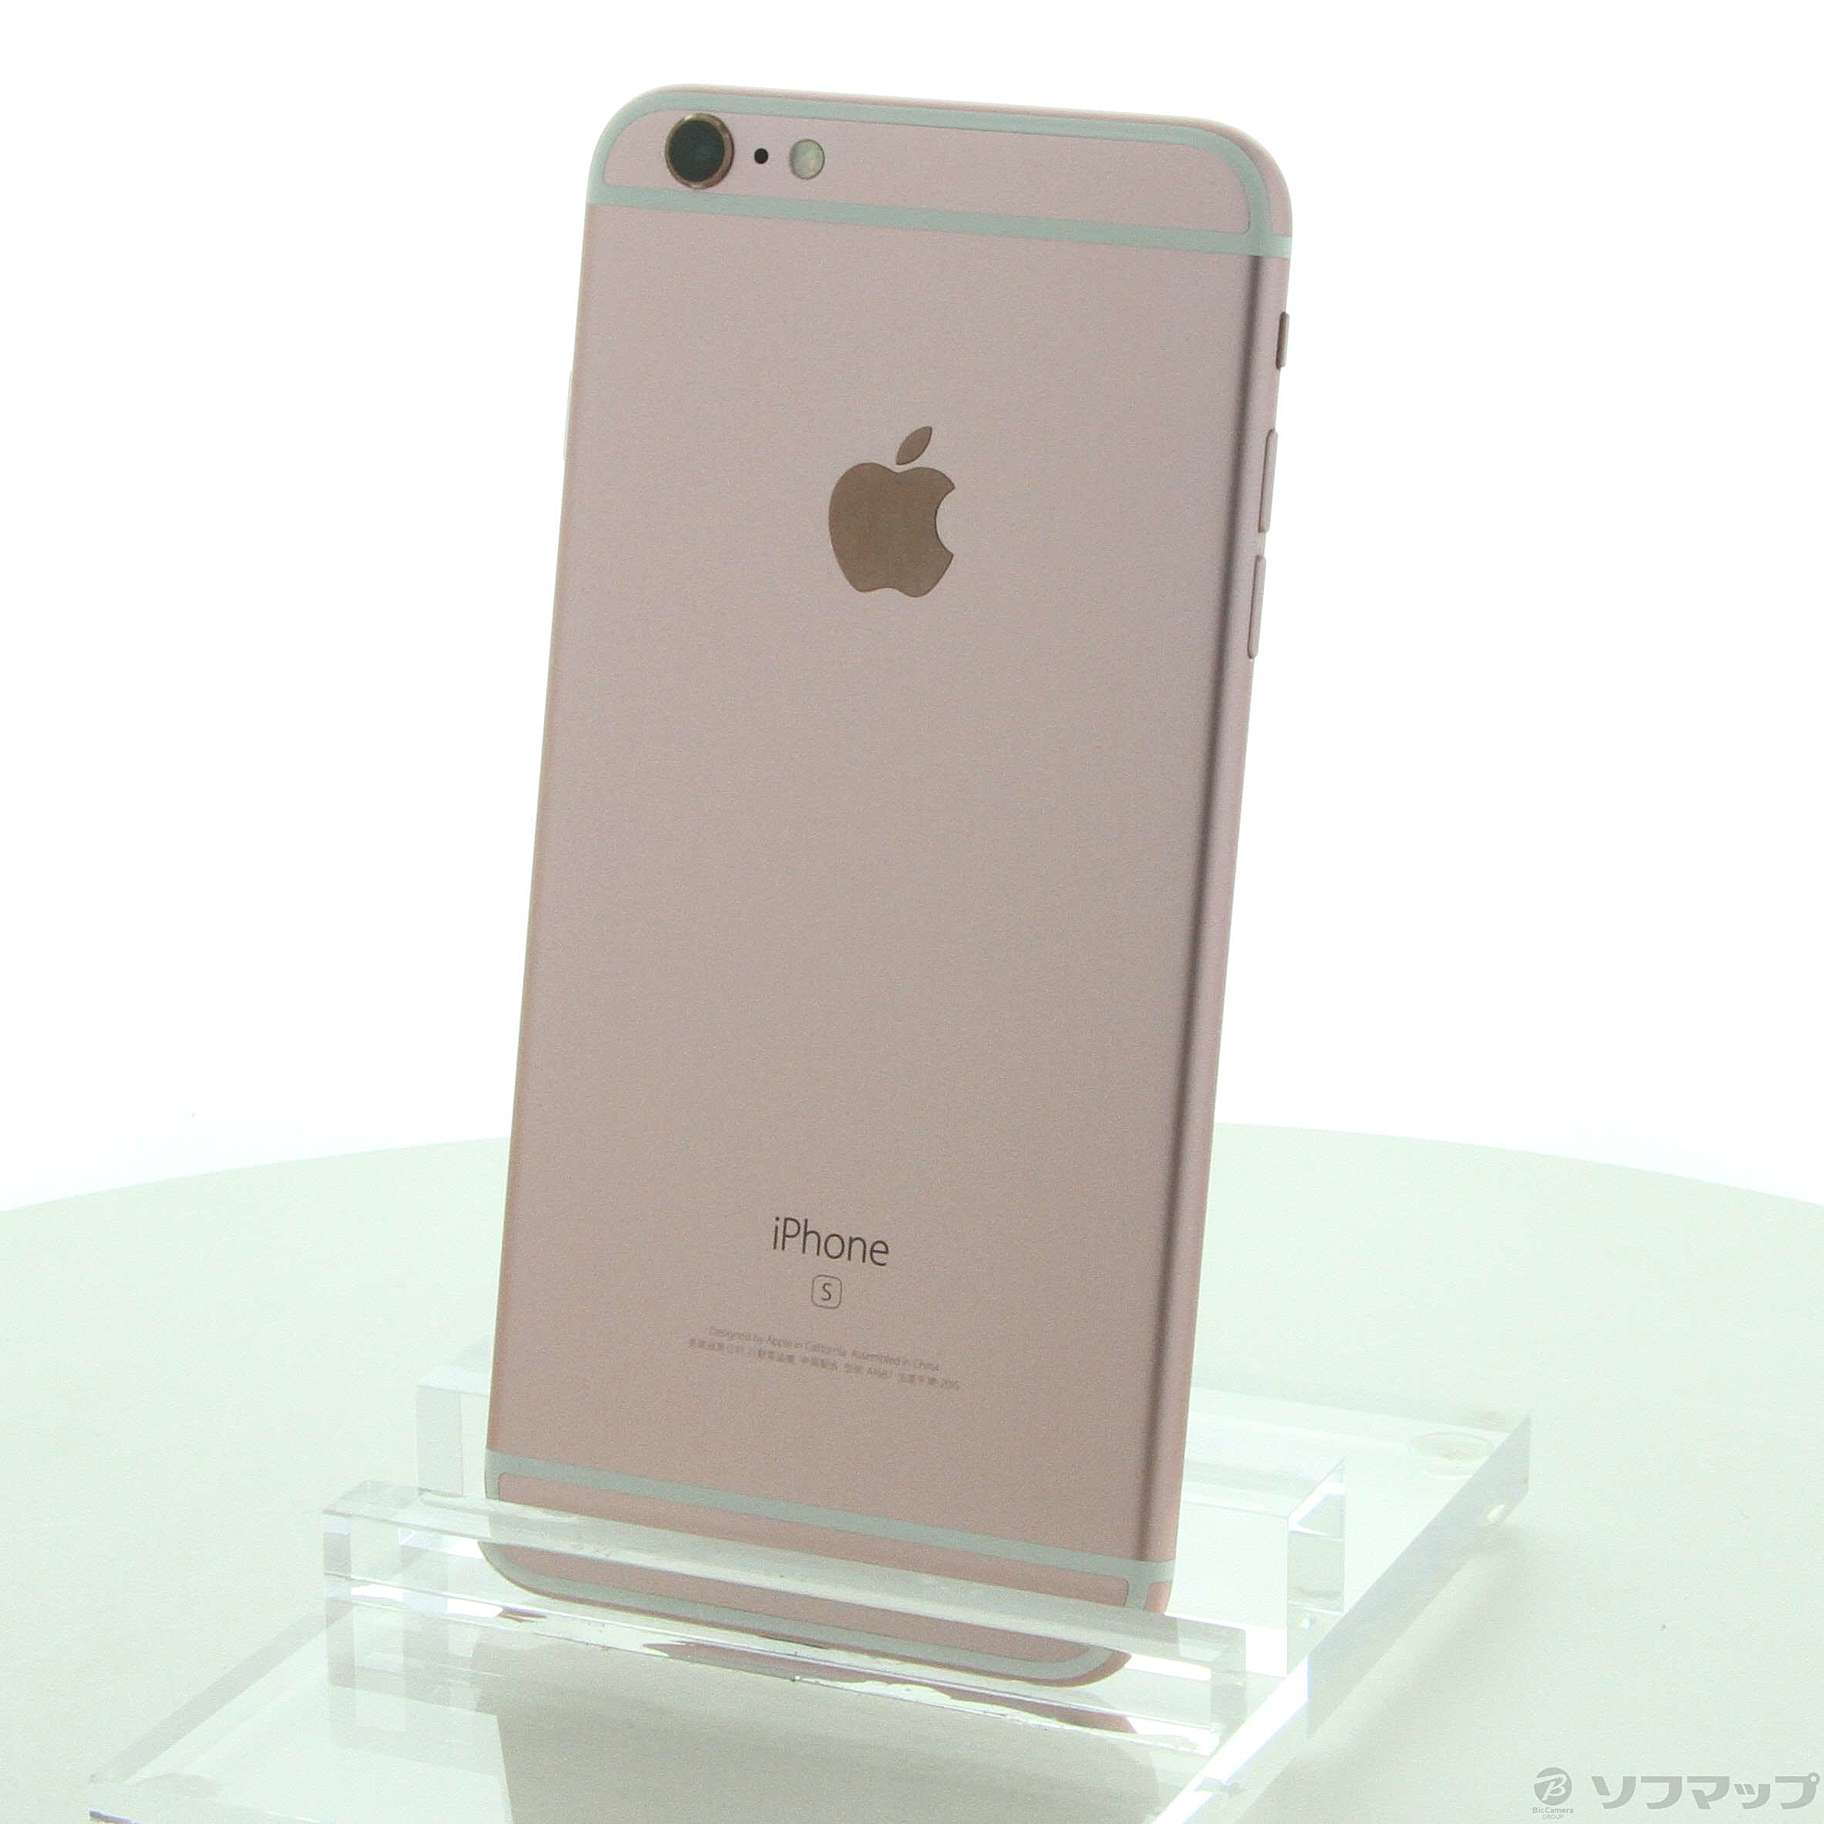 宅配宅配送 iPhone6s Plus 64GB Rose Gold Simフリー 送料無料宝彩館 